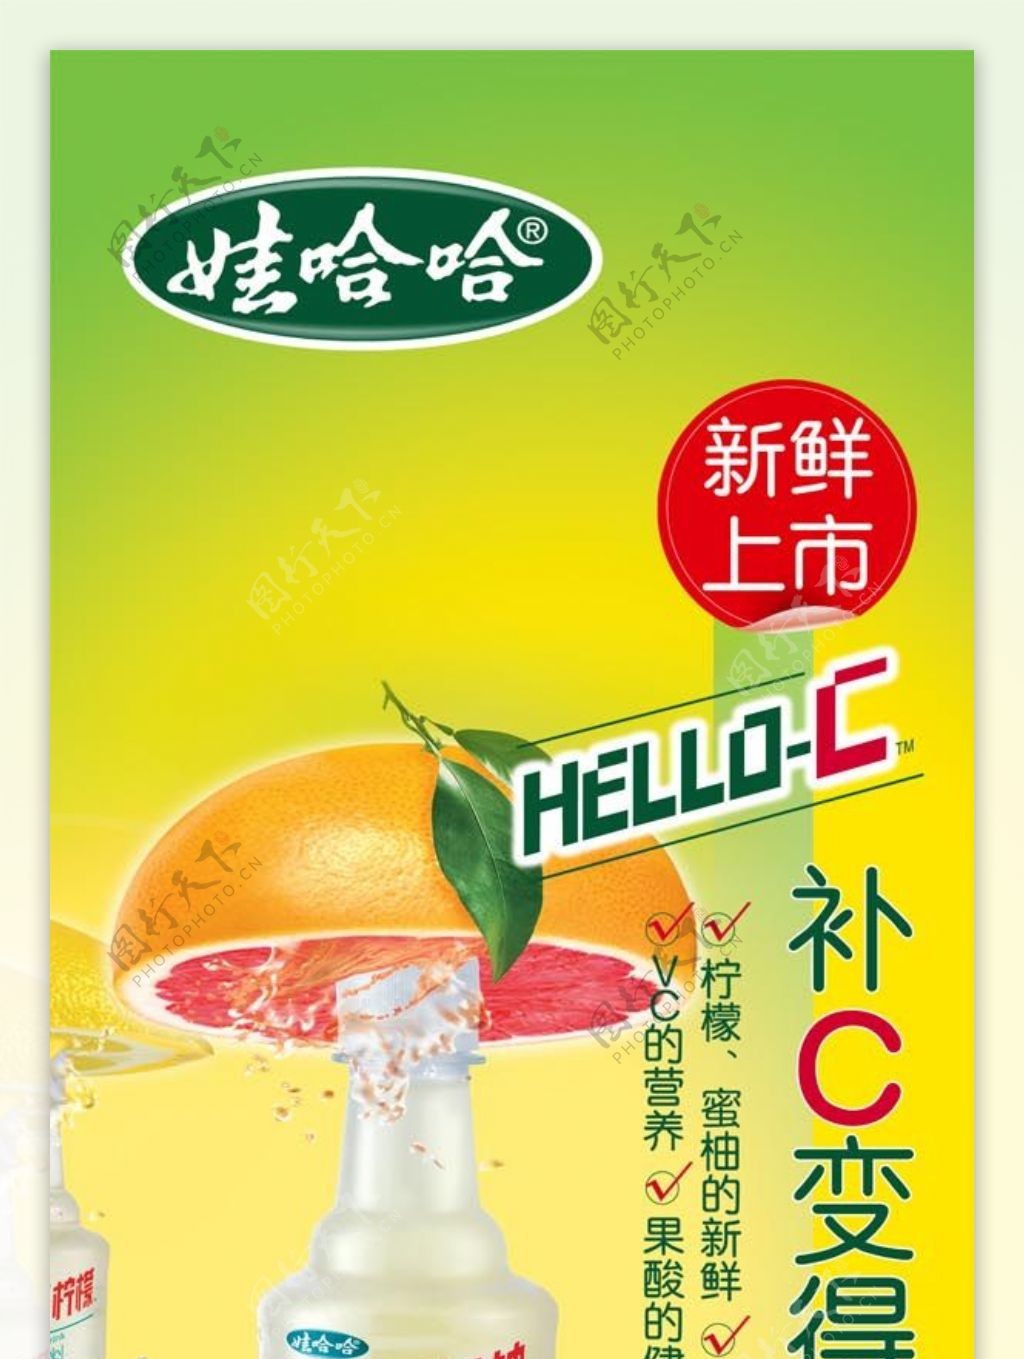 Helloc饮料广告